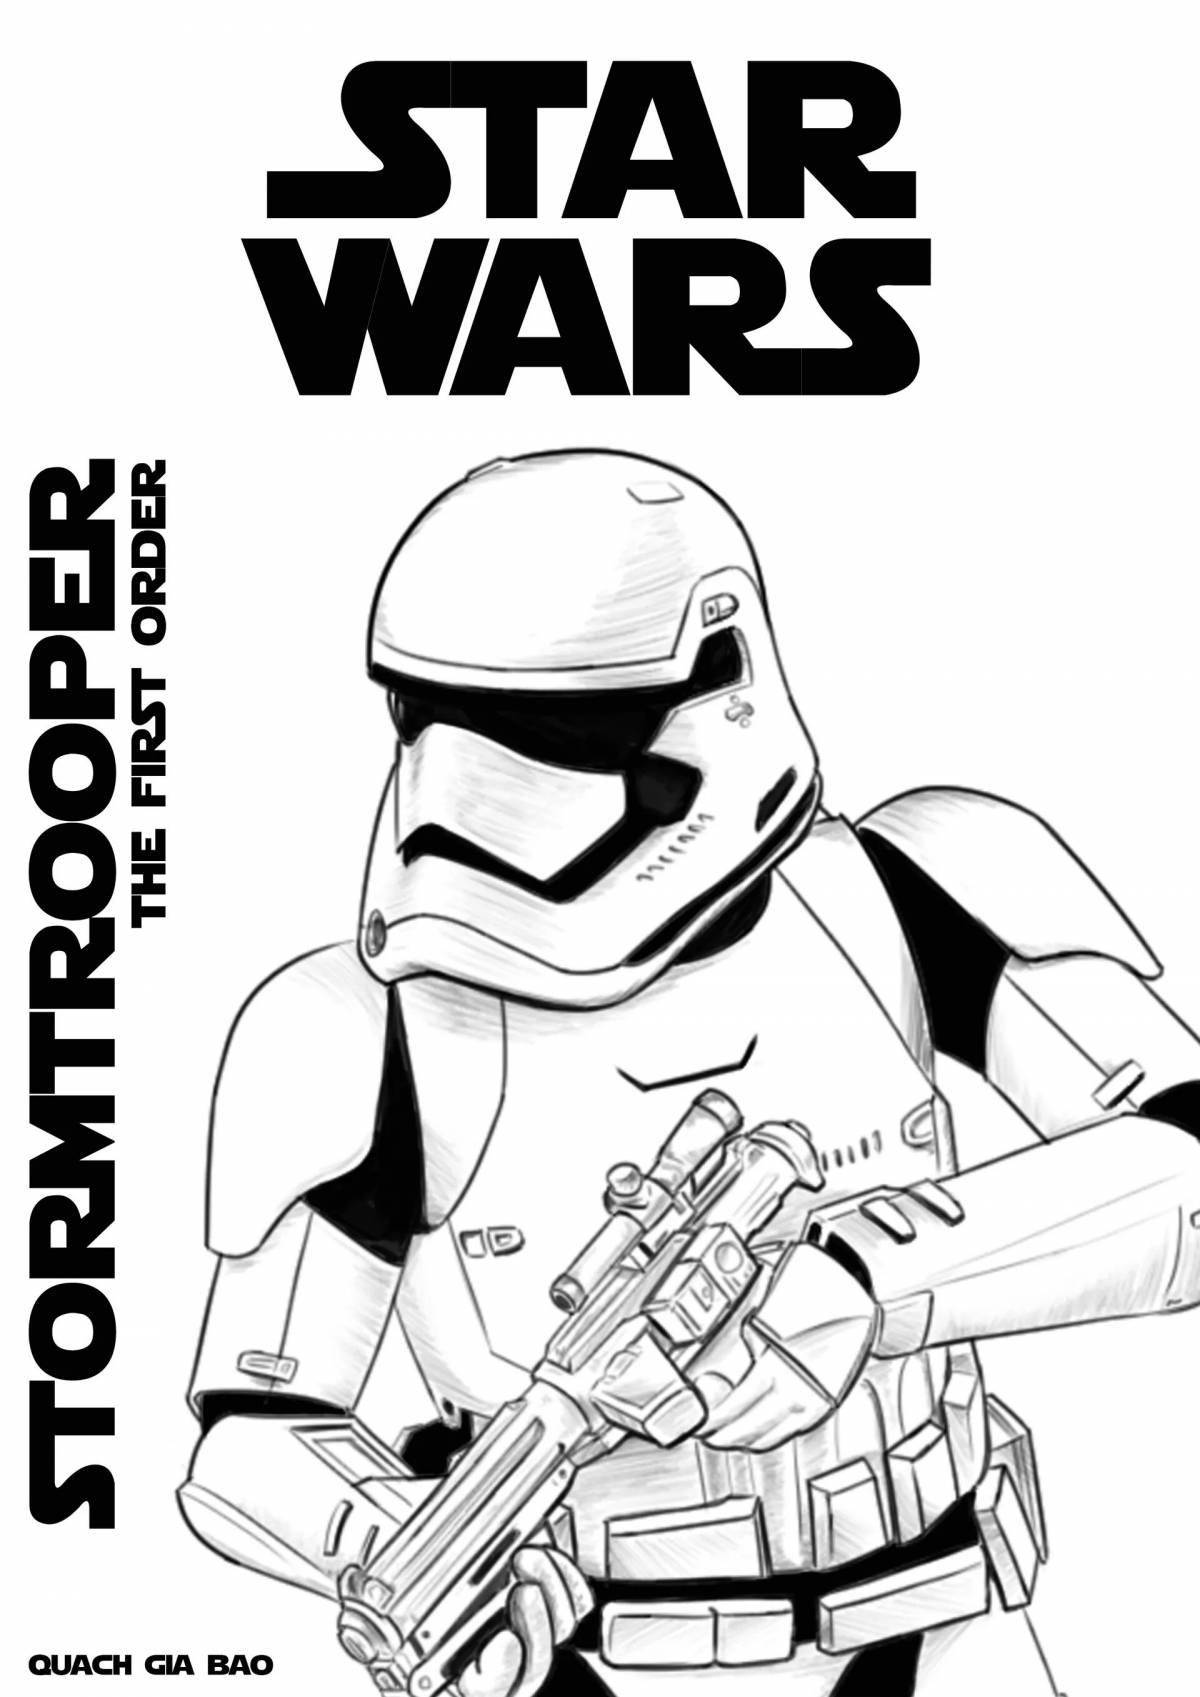 Great star wars stormtrooper coloring book